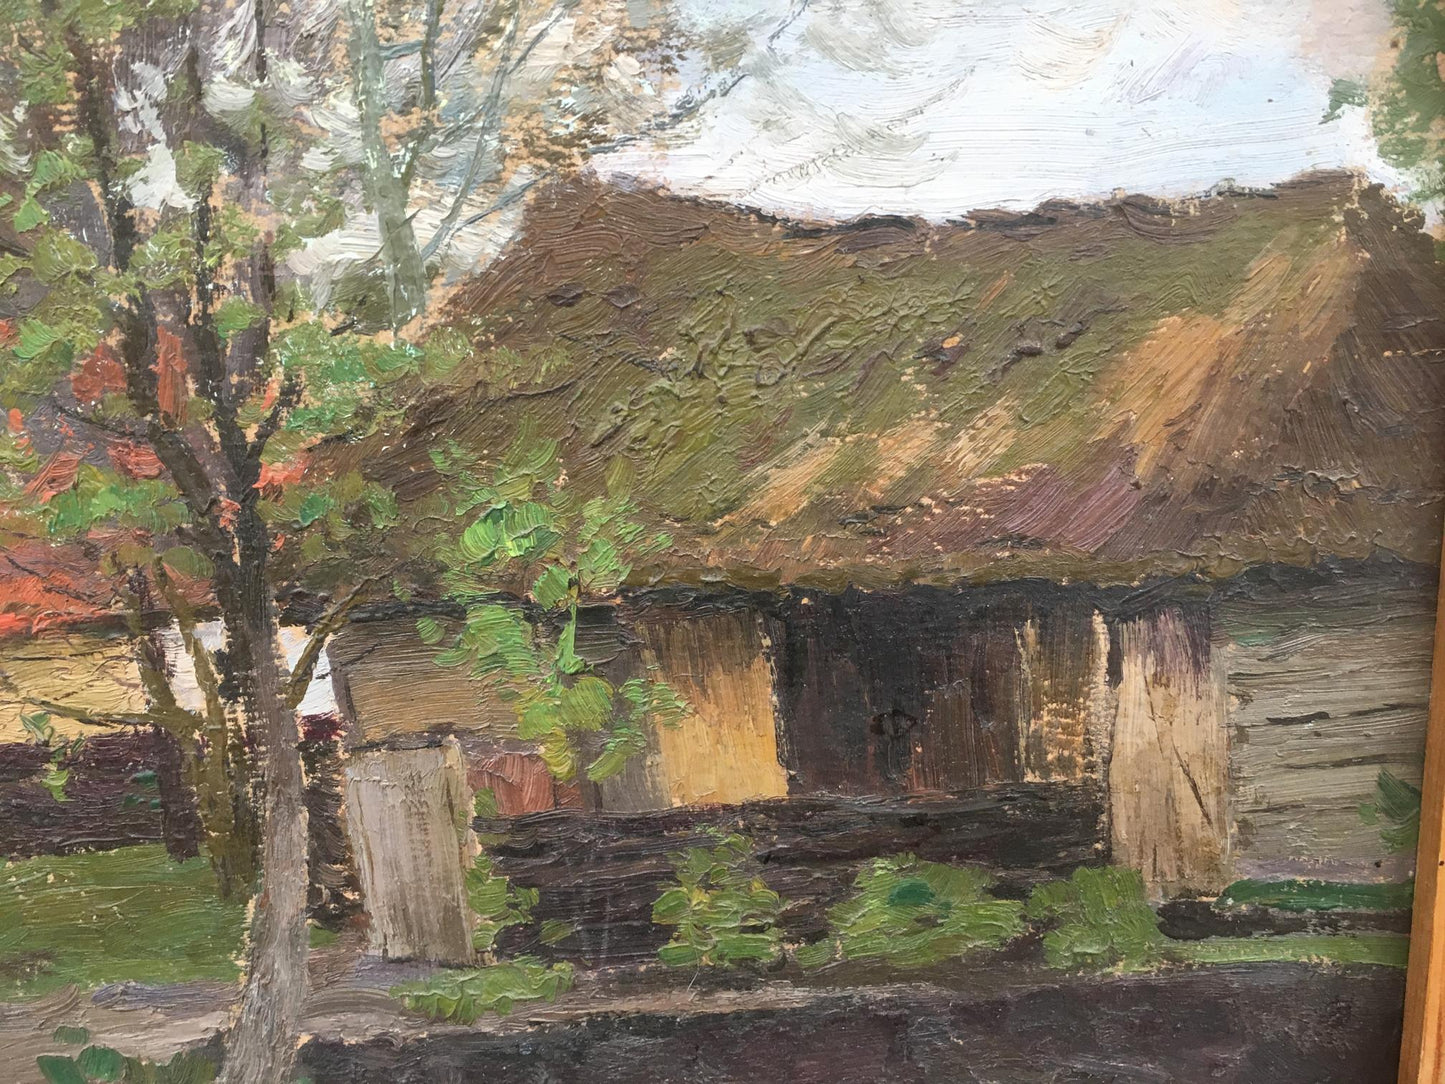 Oil painting Rural life Ivan Kirillovich Tsyupka